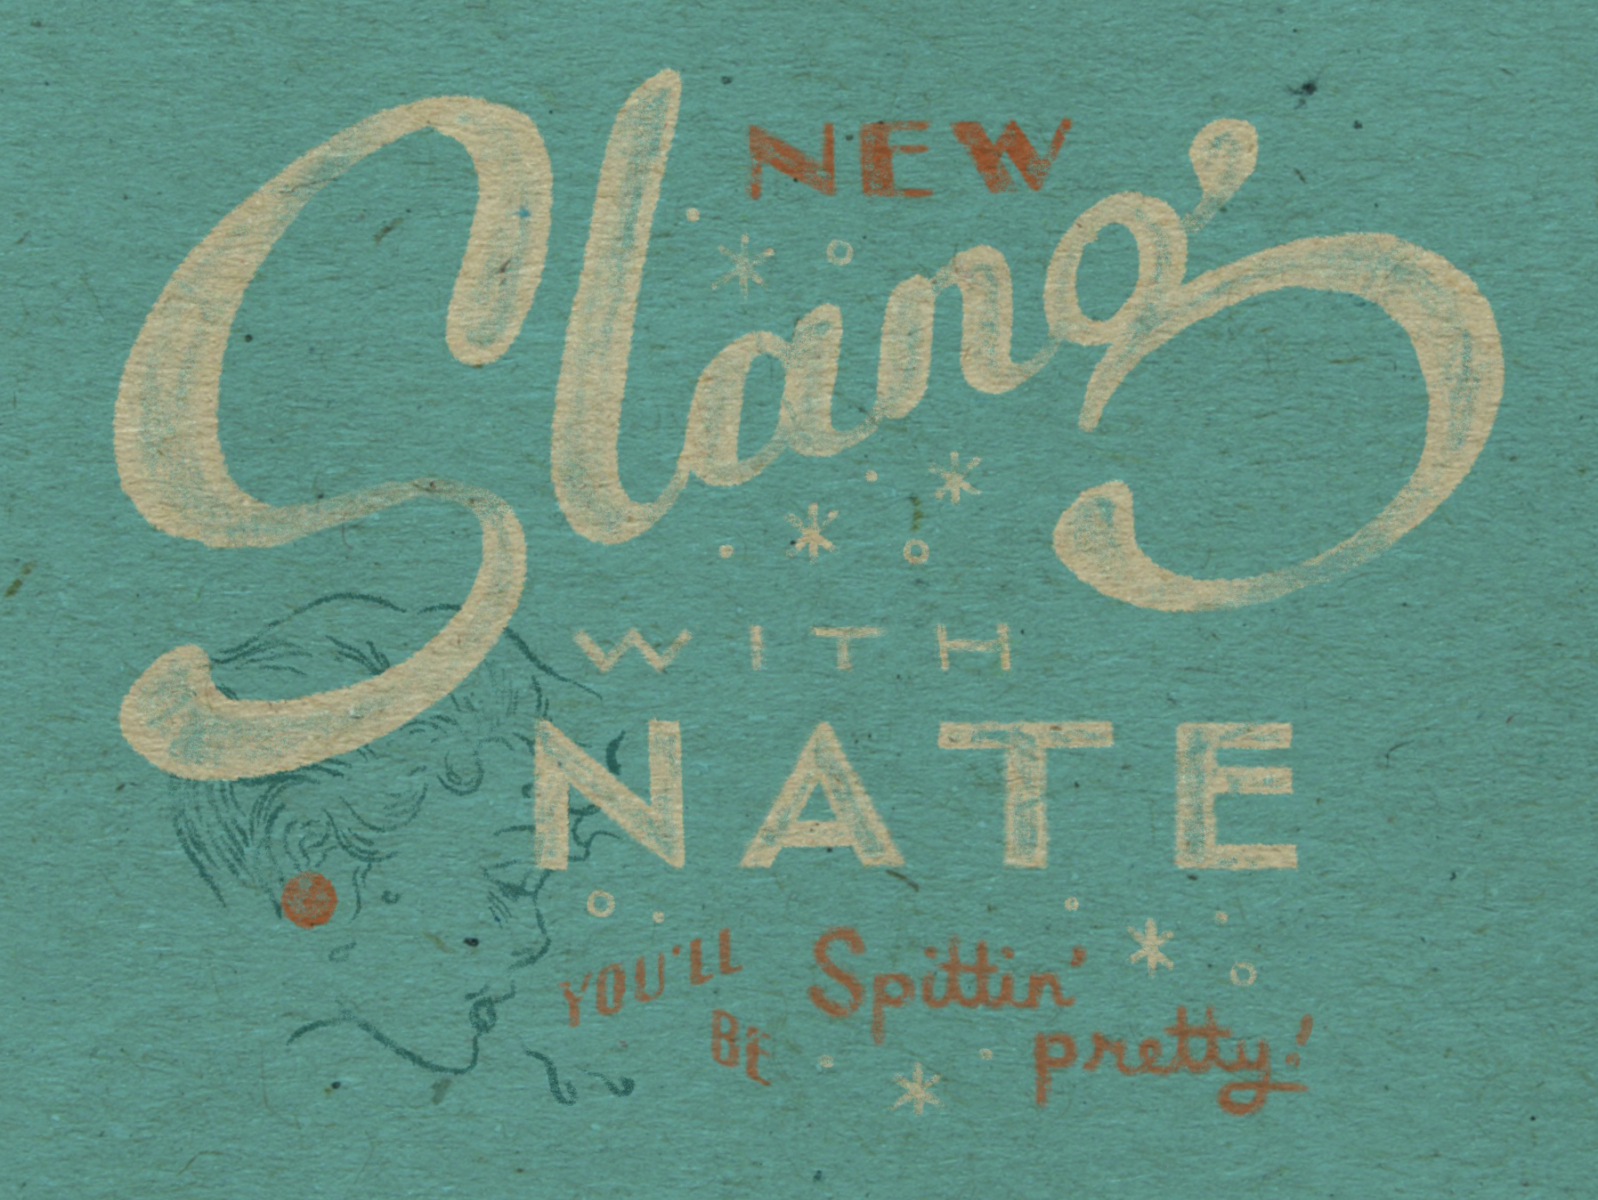 New Slang by Nathan Burgess on Dribbble